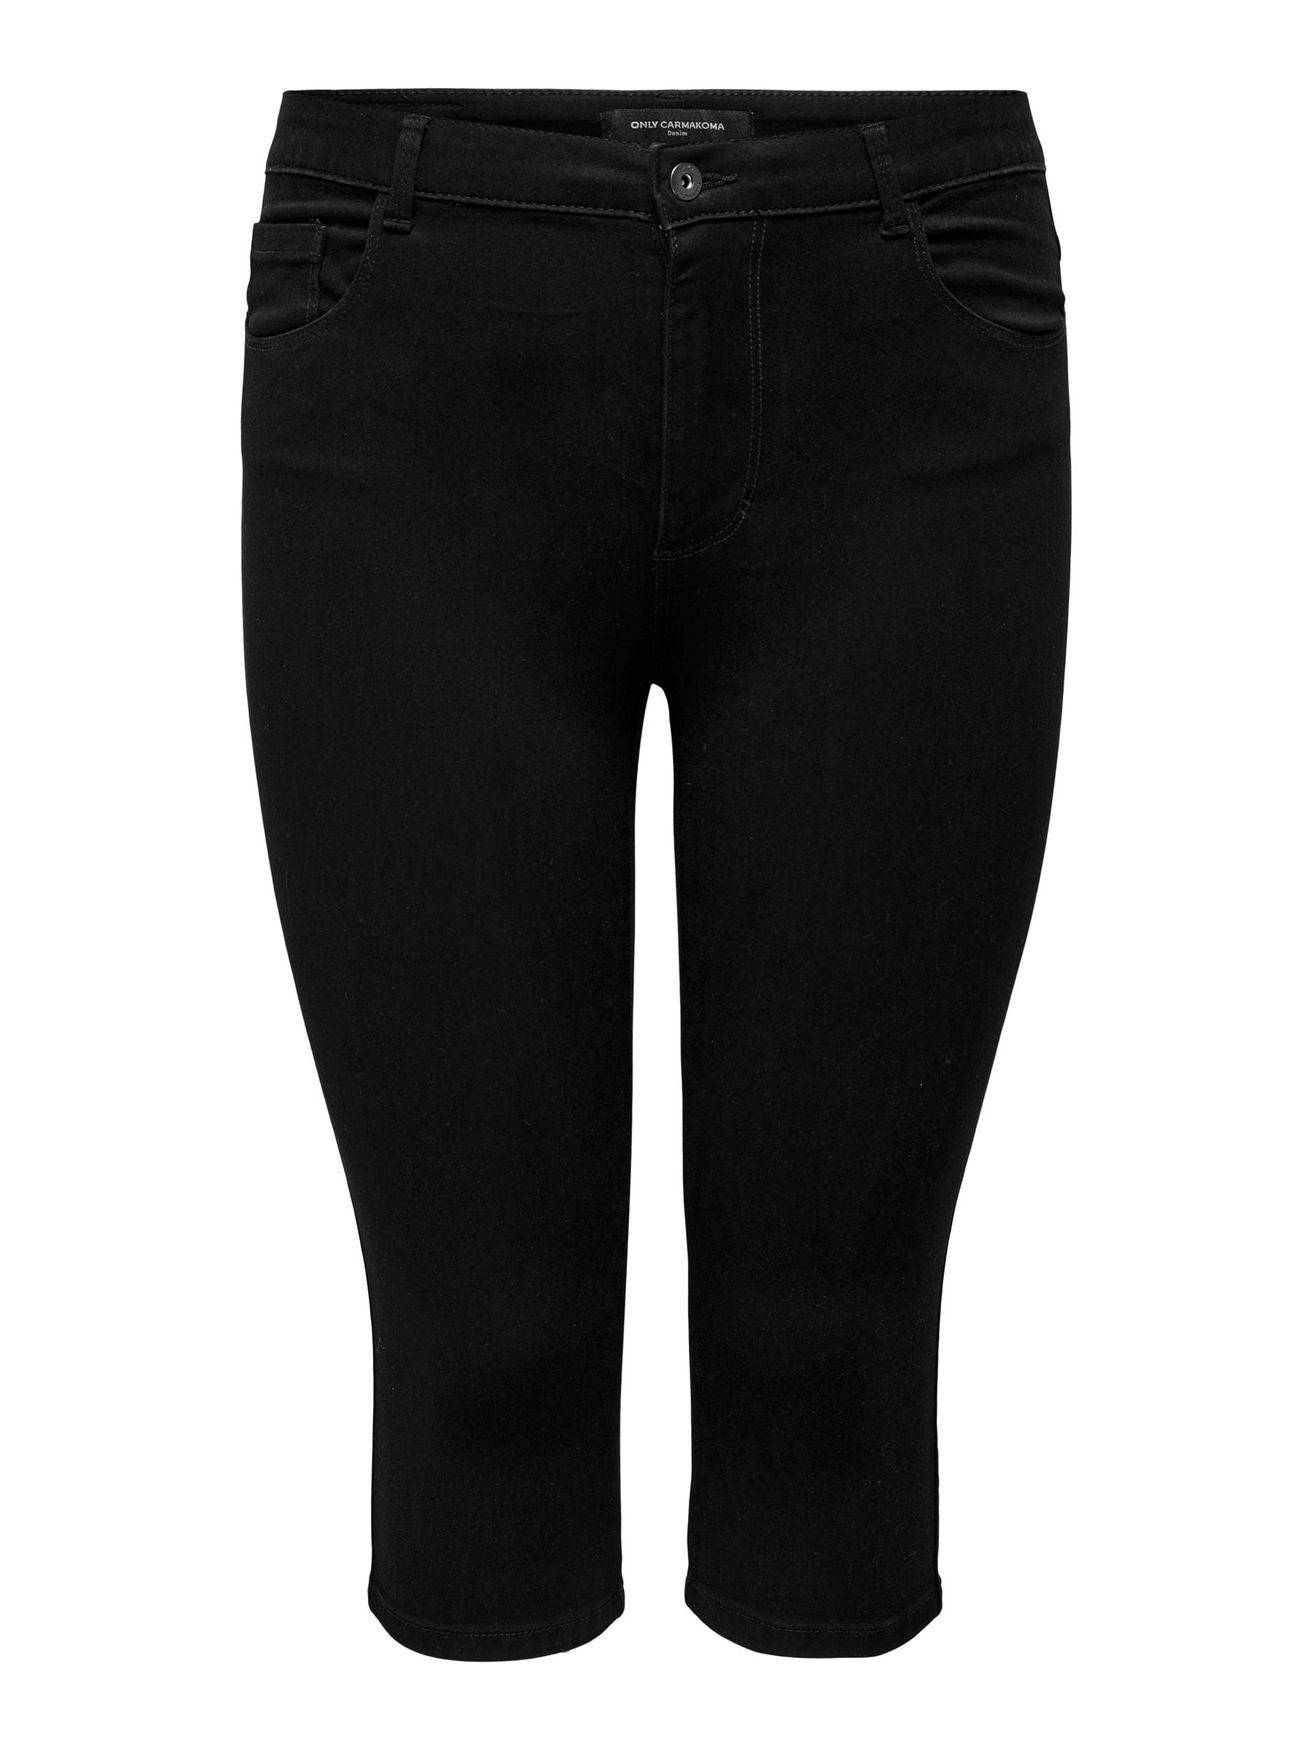 in CARAUGUSTA Size Hose Übergröße CARMAKOMA Shorts 3/4Capri Schwarz 4794 Caprihose Jeans Denim Plus ONLY